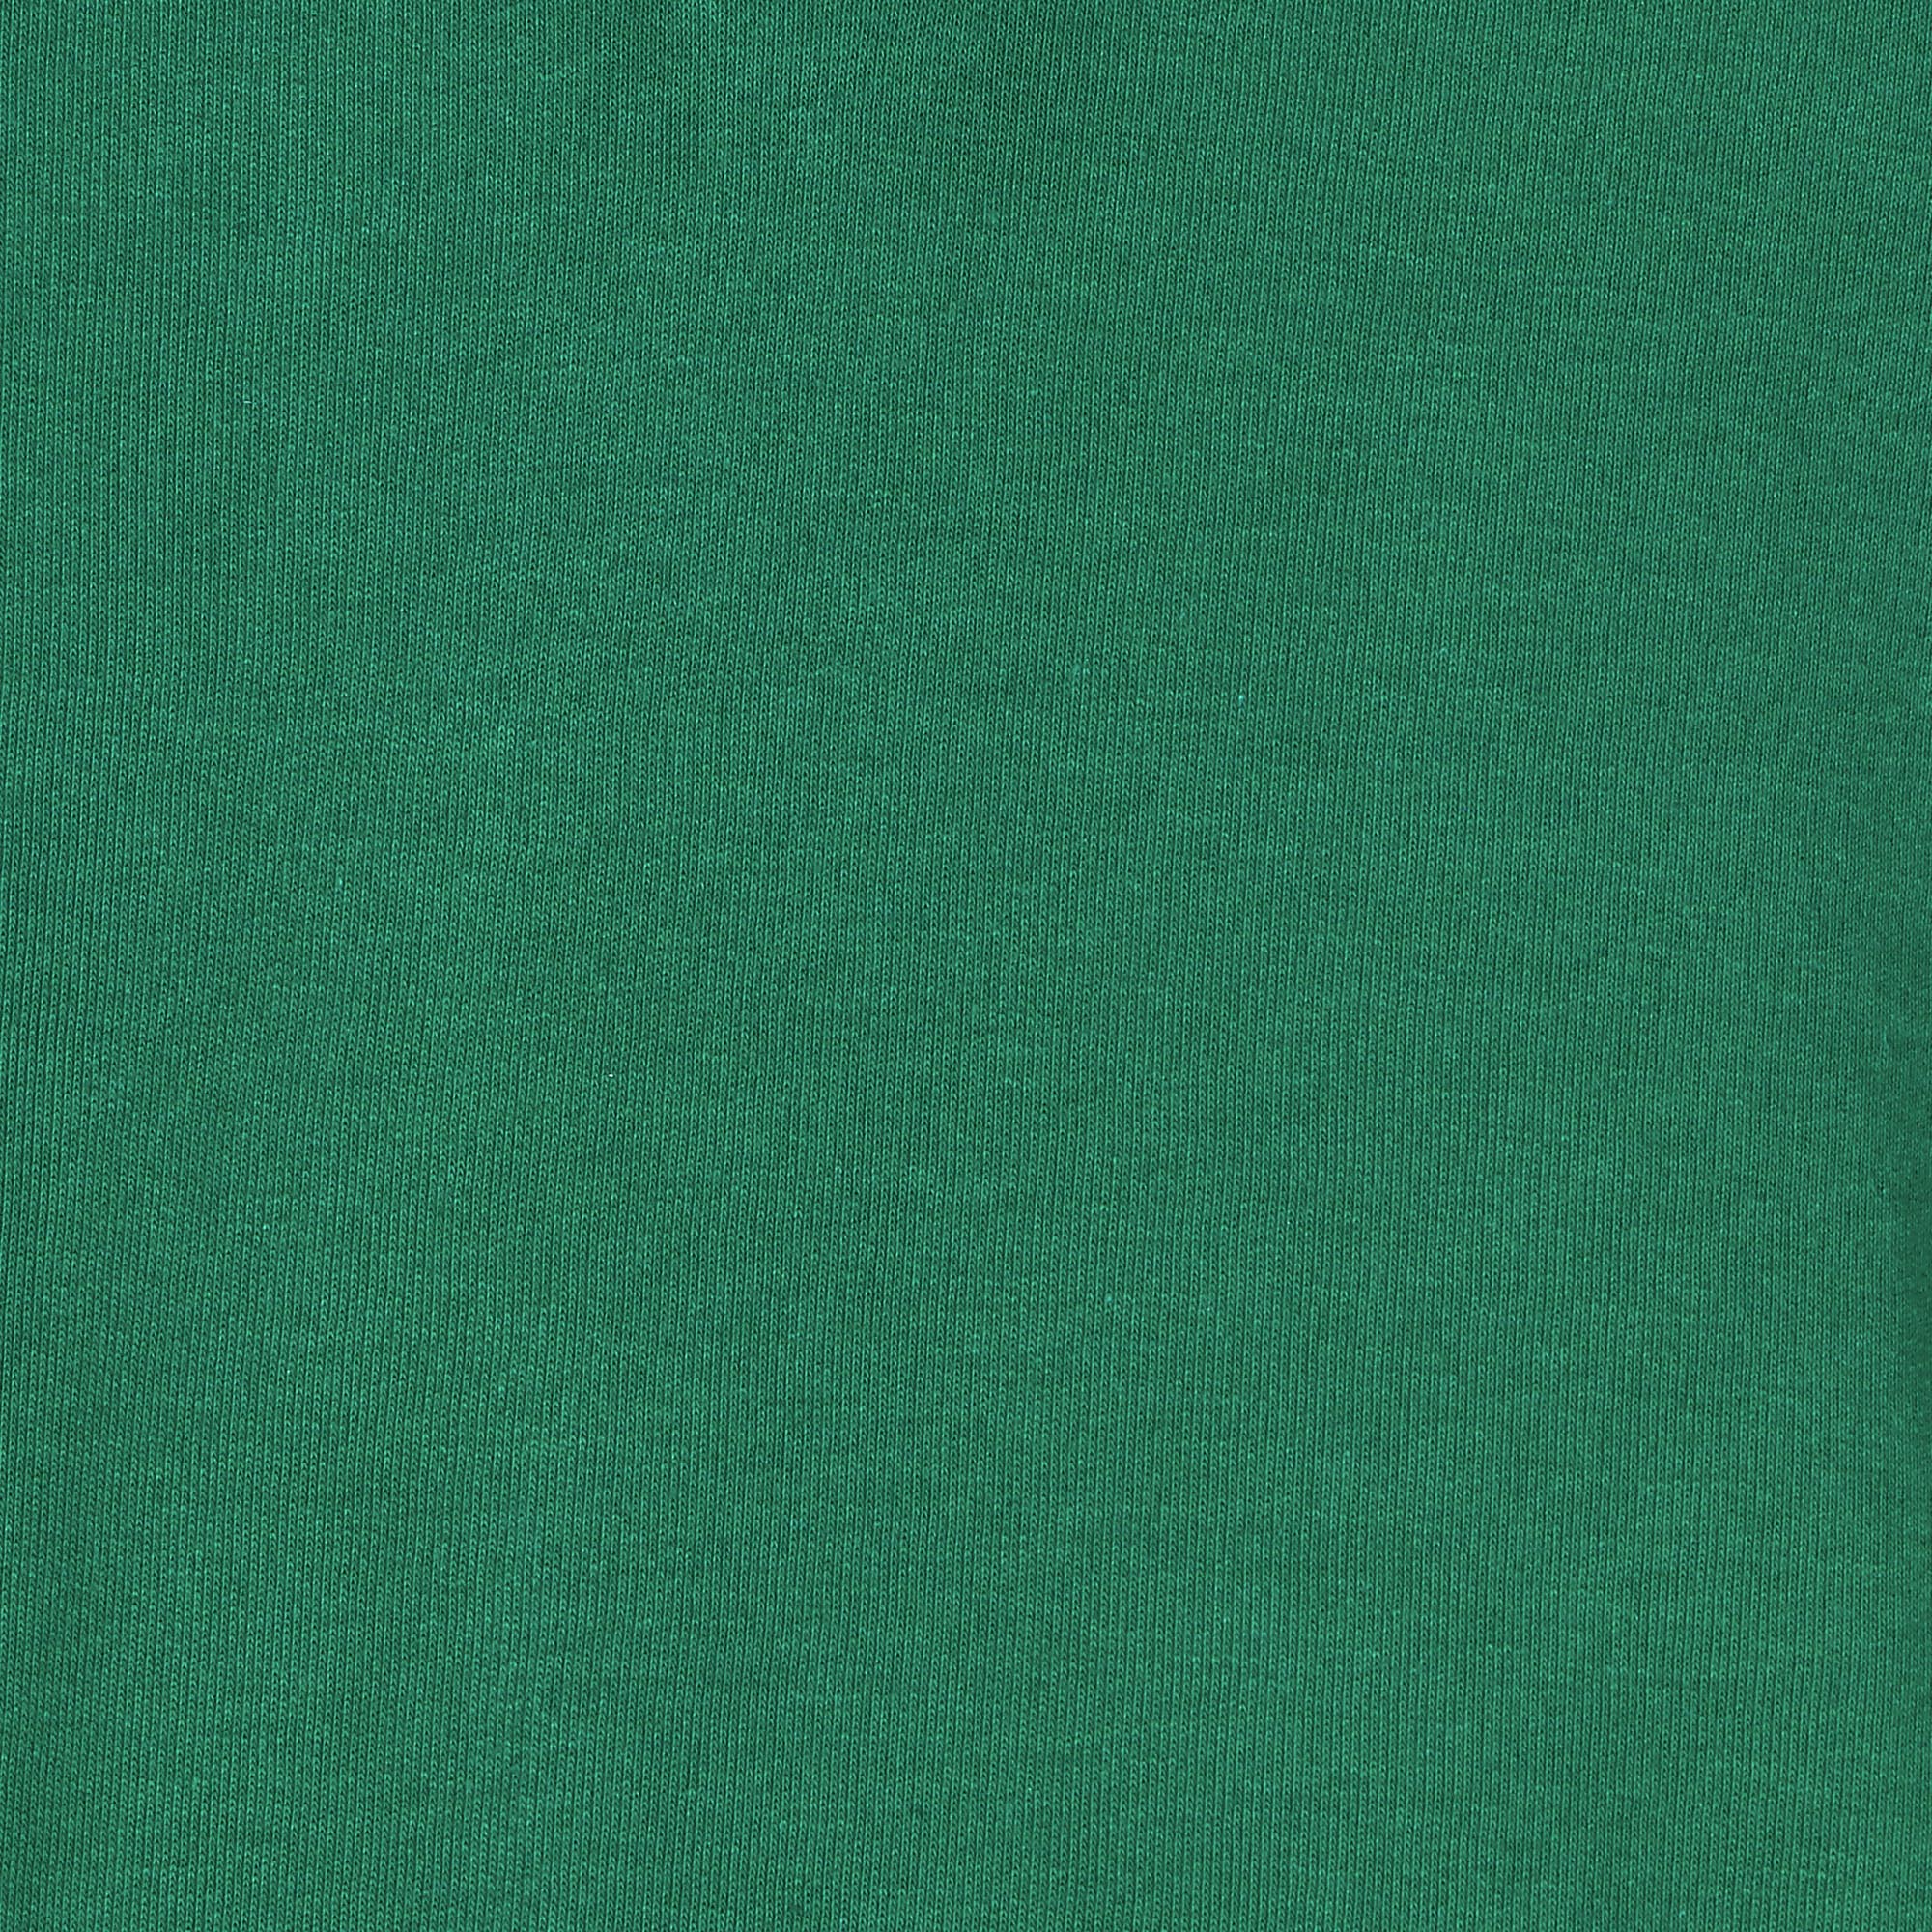 Мужская футболка-поло Diva Teks зелёная (DTD-09), цвет зелёный, размер 50-52 - фото 6